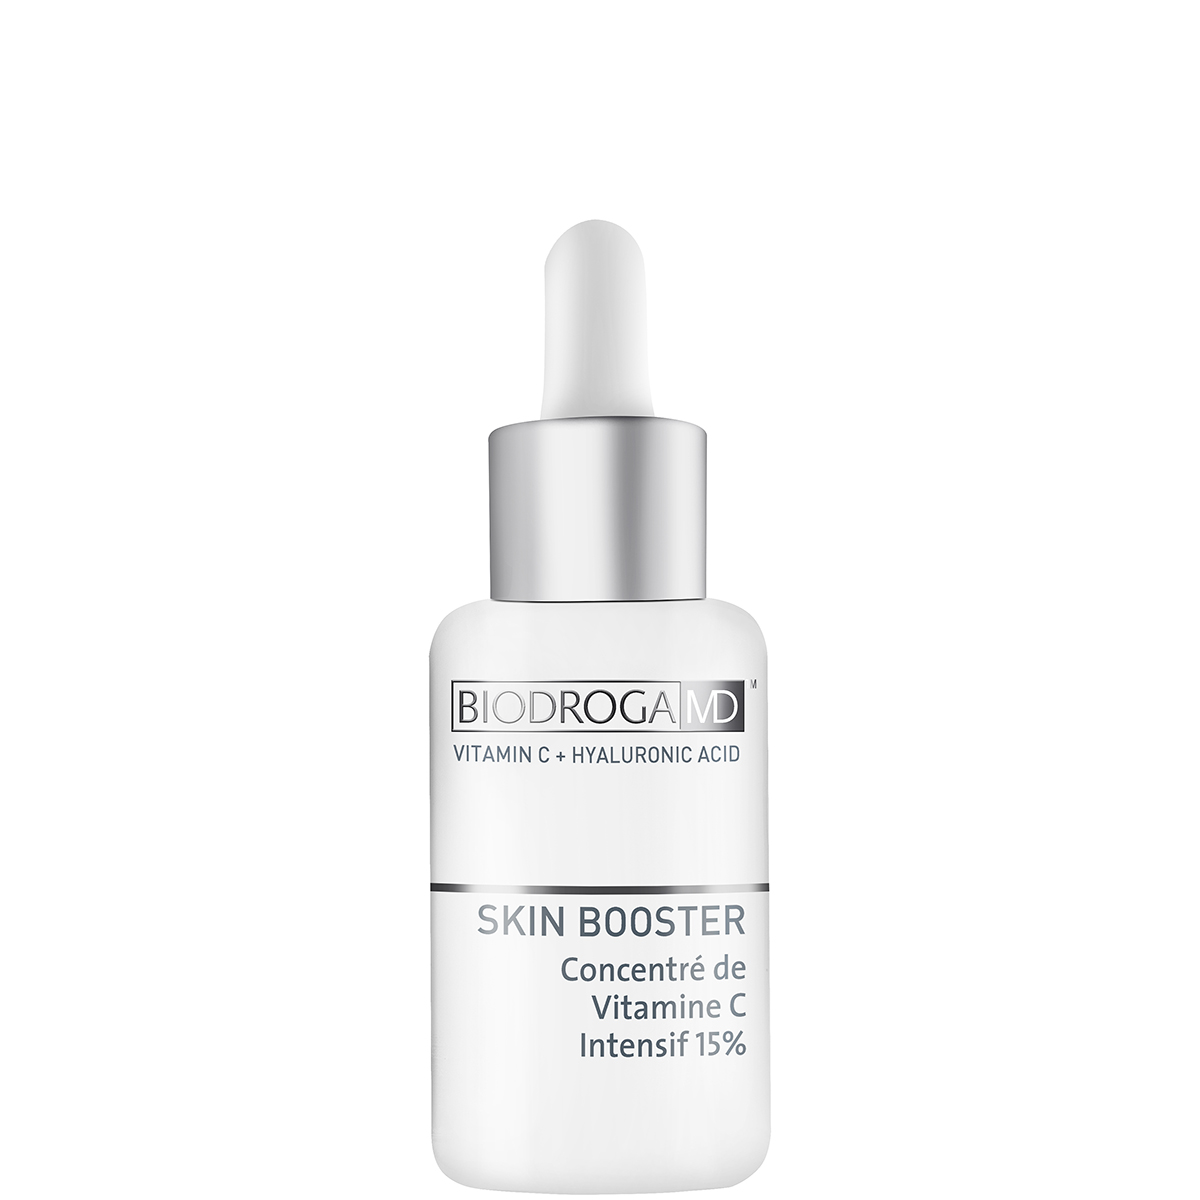 Biodroga Md Skin Booster Vitamin C Concentrate 15